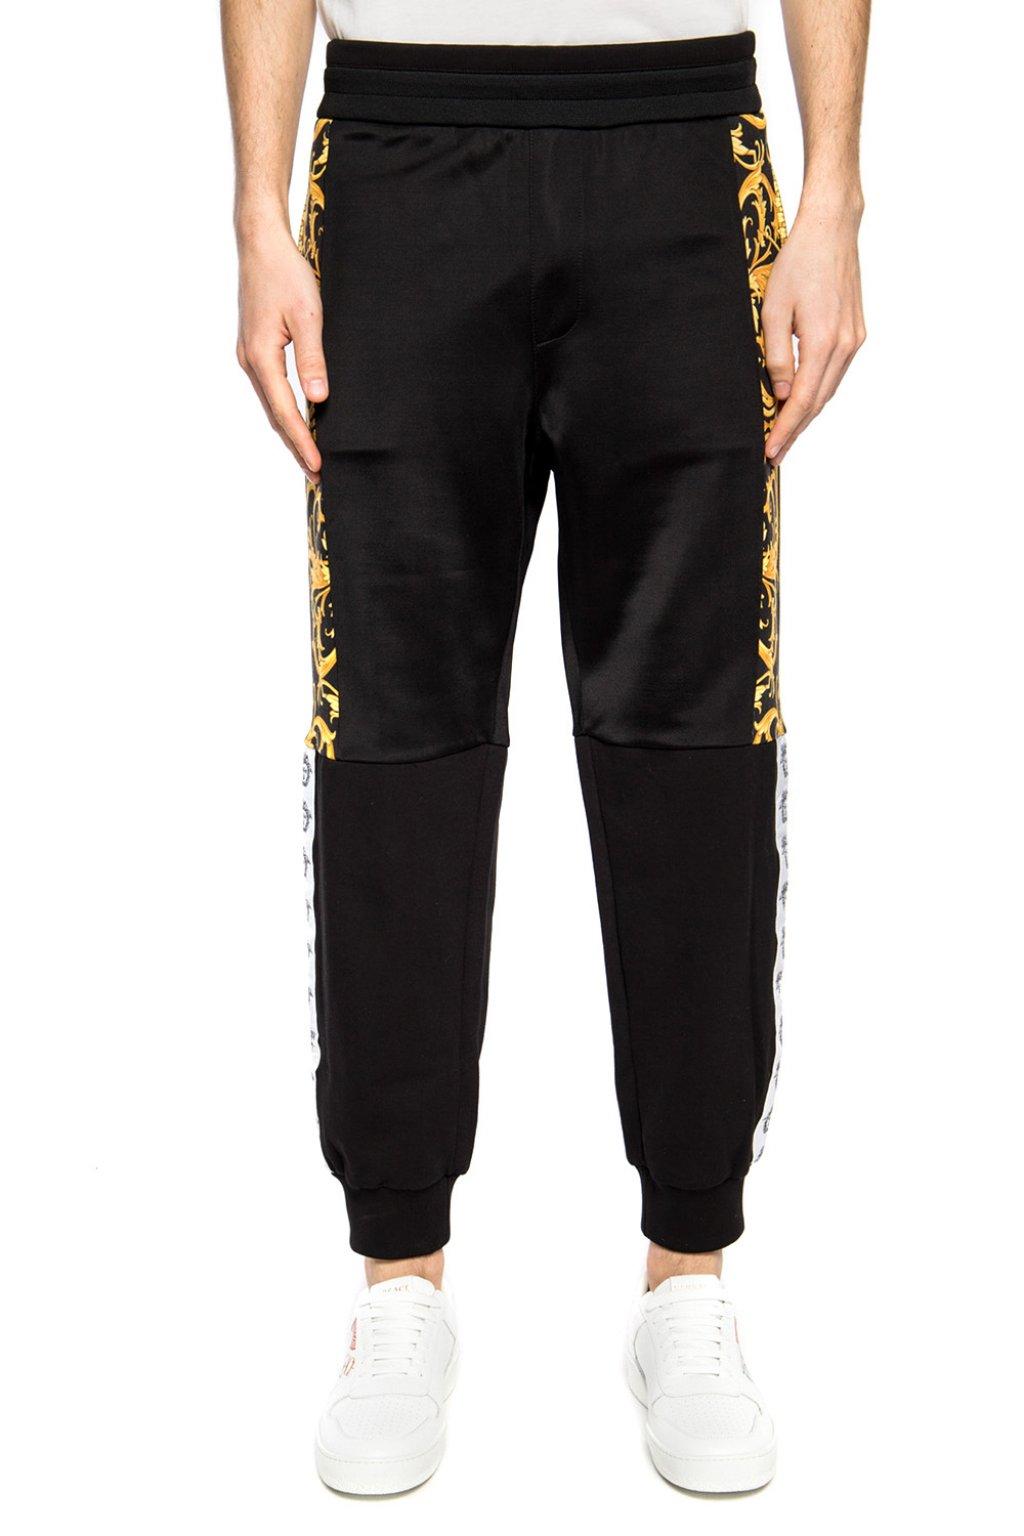 Versace Synthetic Baroque Motif Sweatpants Black for Men - Lyst